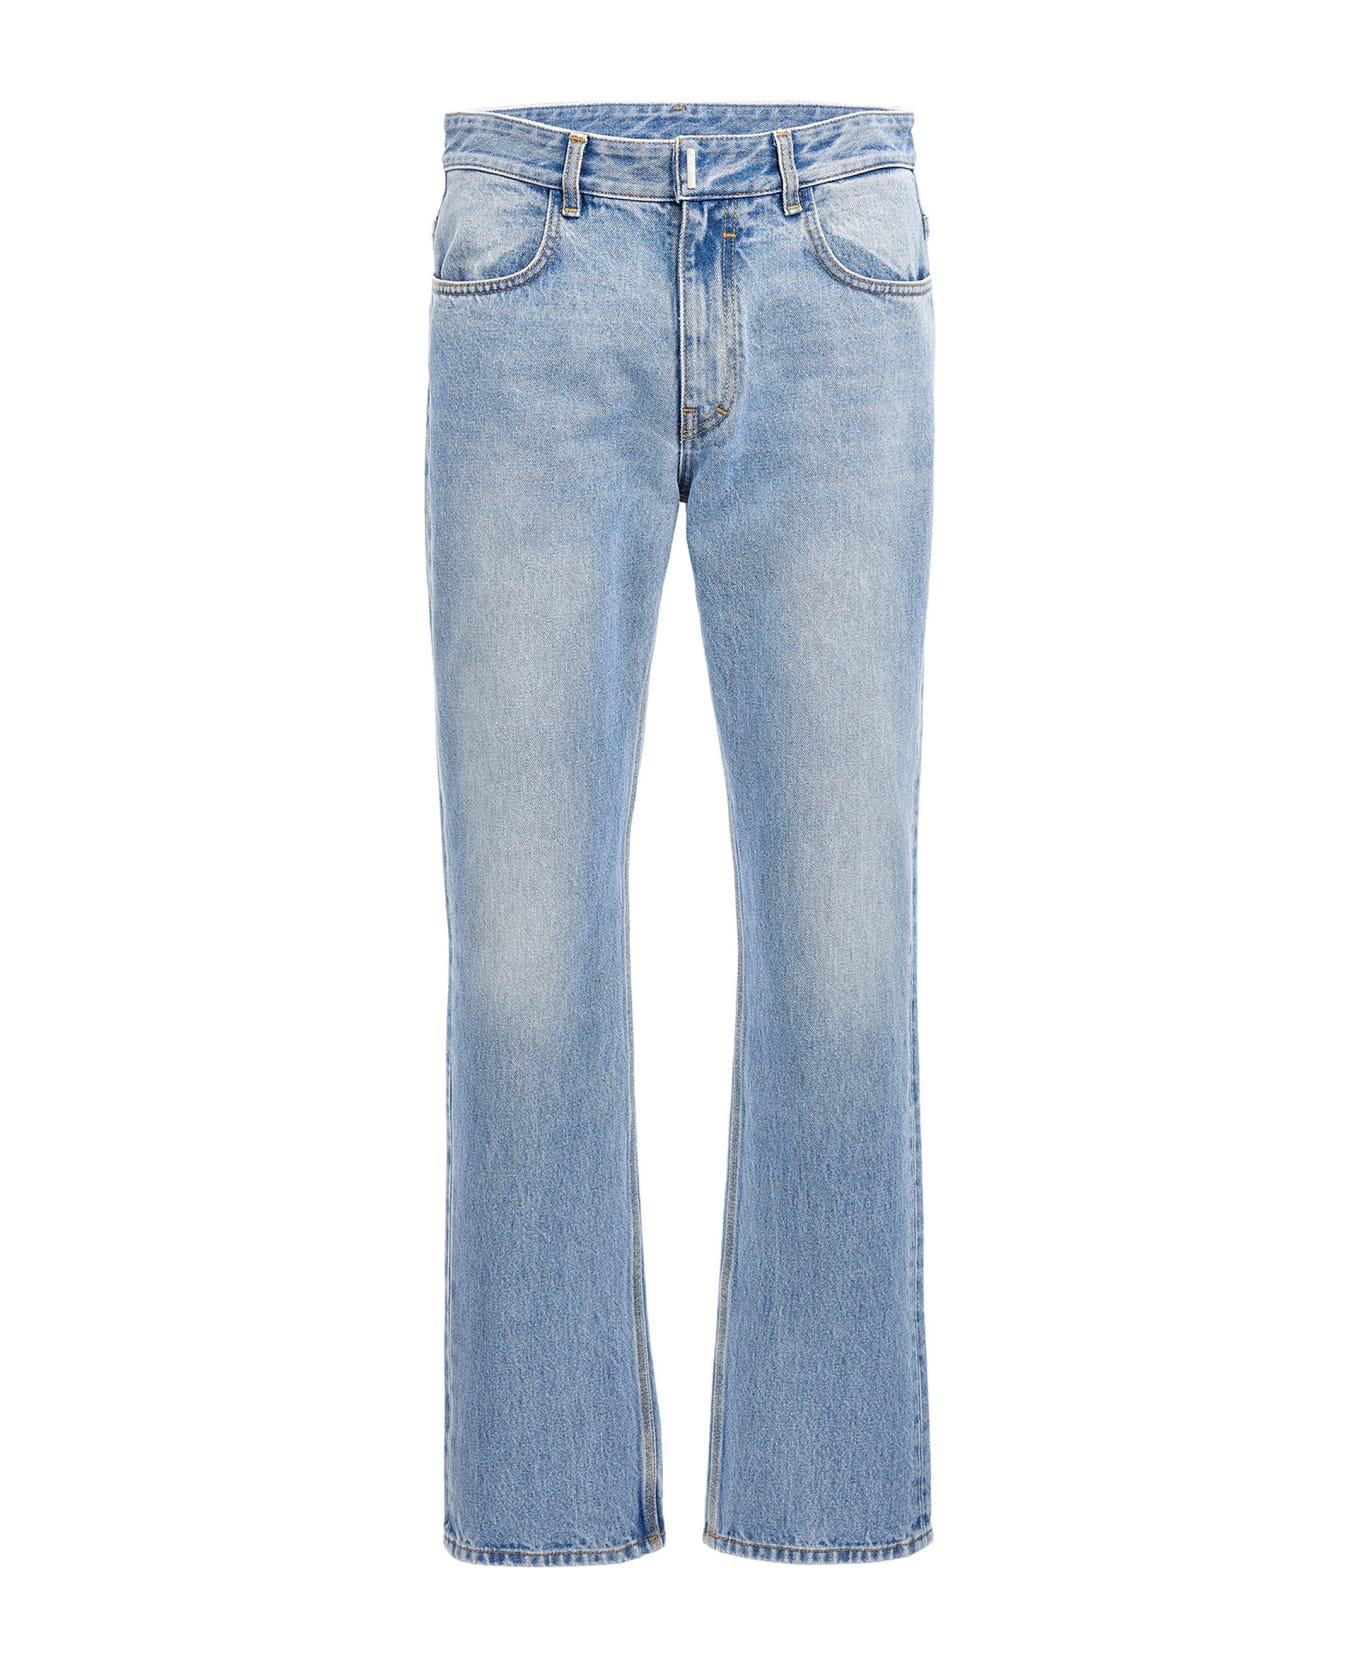 Givenchy Denim Jeans - LIGHT BLUE